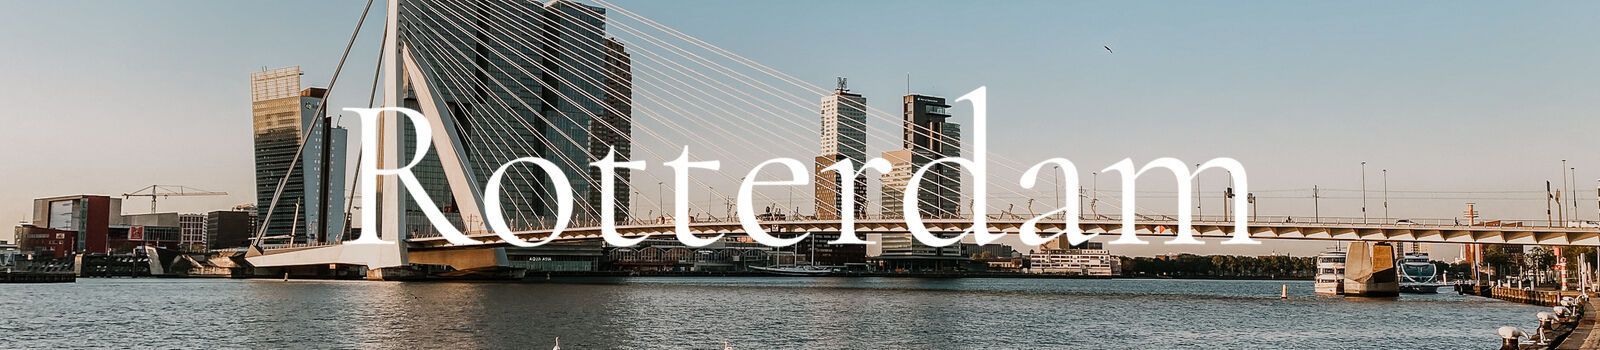 Rotterdam banner